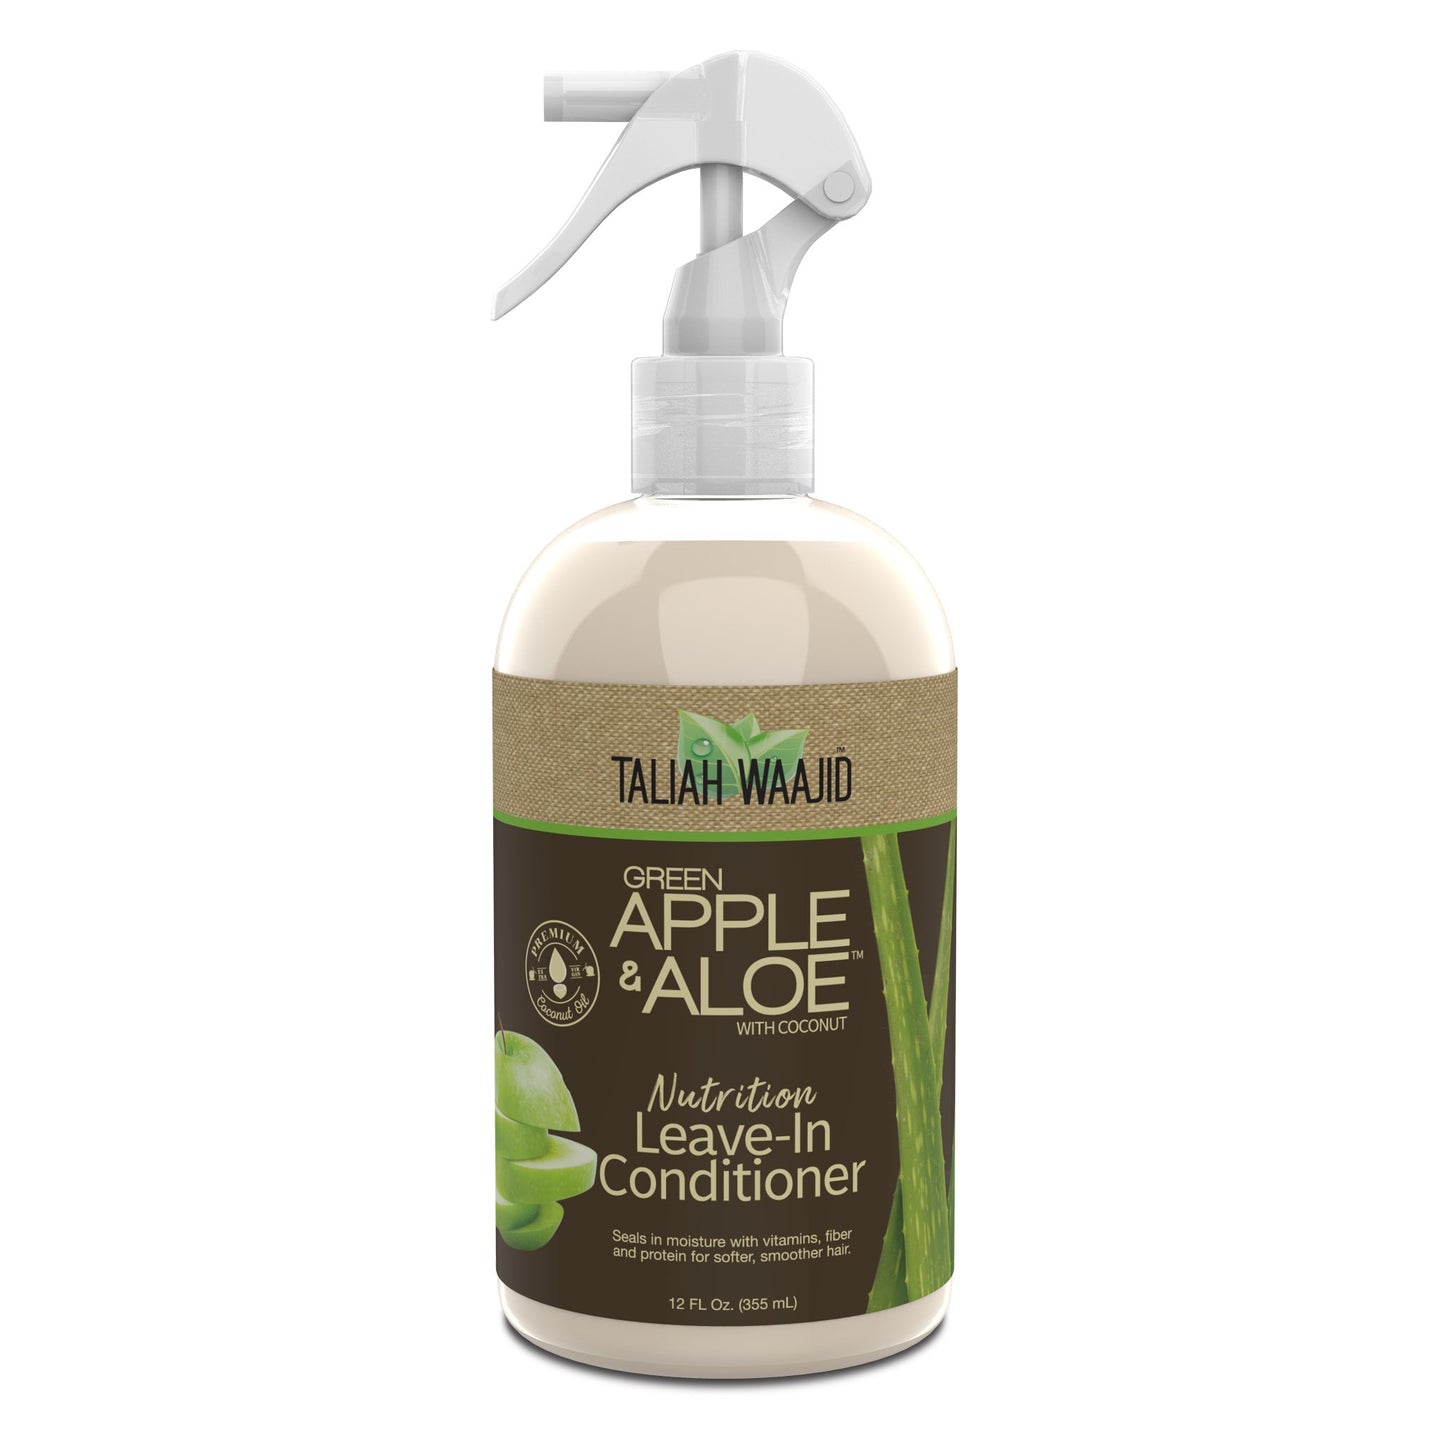 Taliah Waajid Green Apple & Aloe Leave-In Conditioner 12 oz